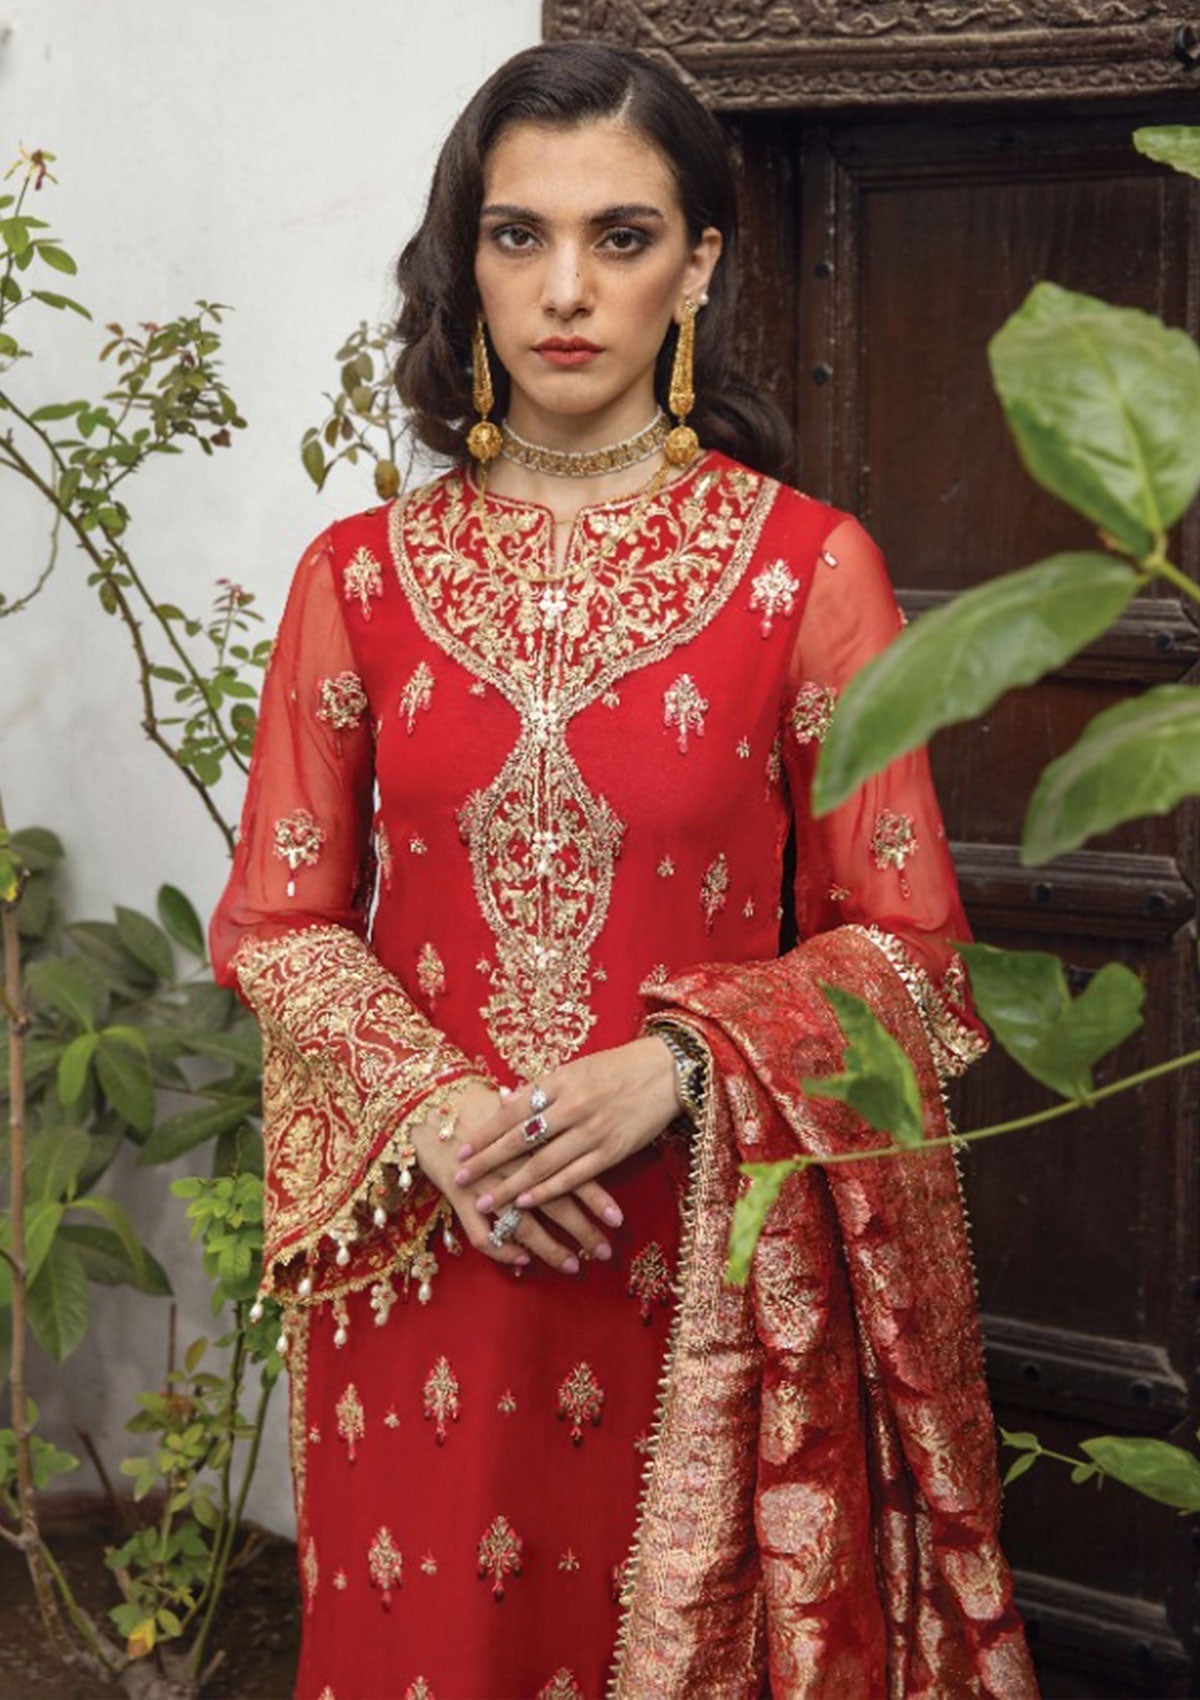 Formal Dress - Anaya - Anahita - Hiranur - AKW#7 available at Saleem Fabrics Traditions